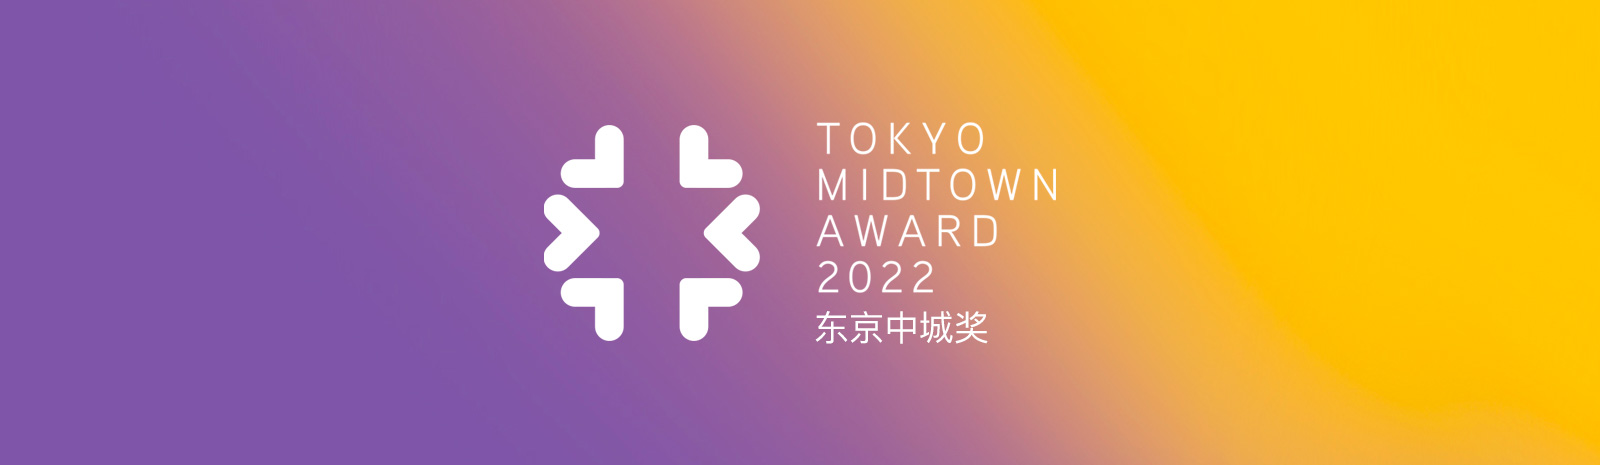 2022 东京中城奖Tokyo Midtown Award